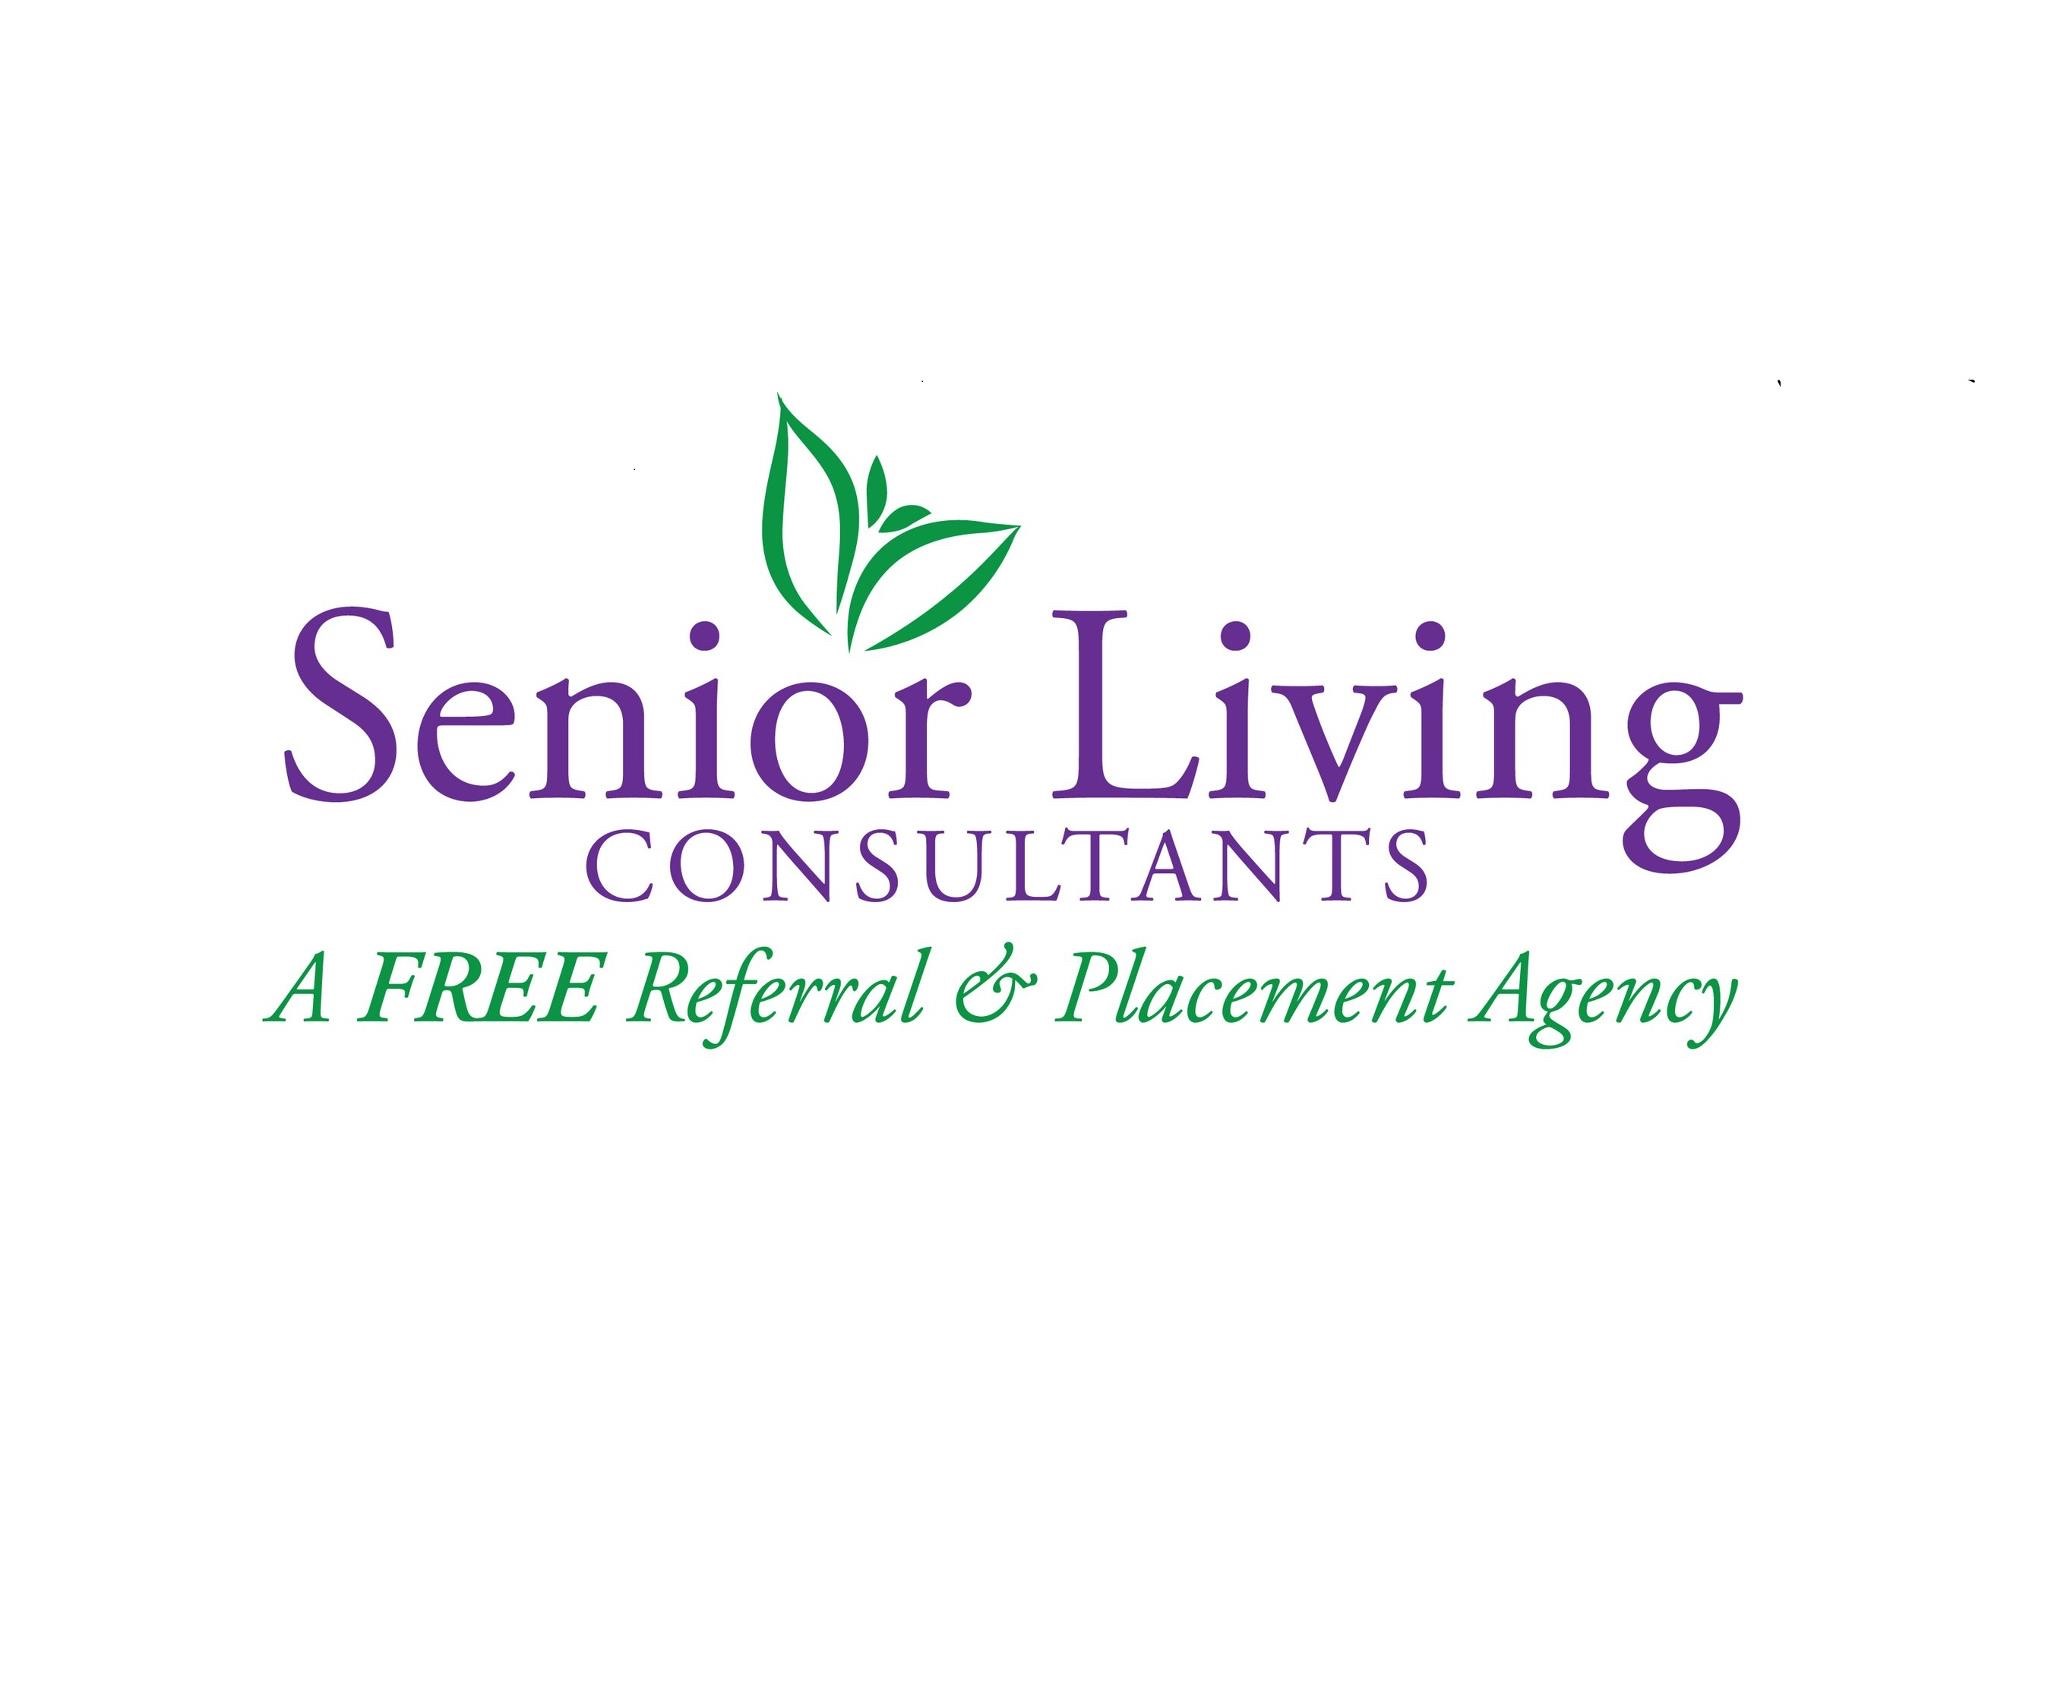 B. Senior Living Consultants (Tier 3)